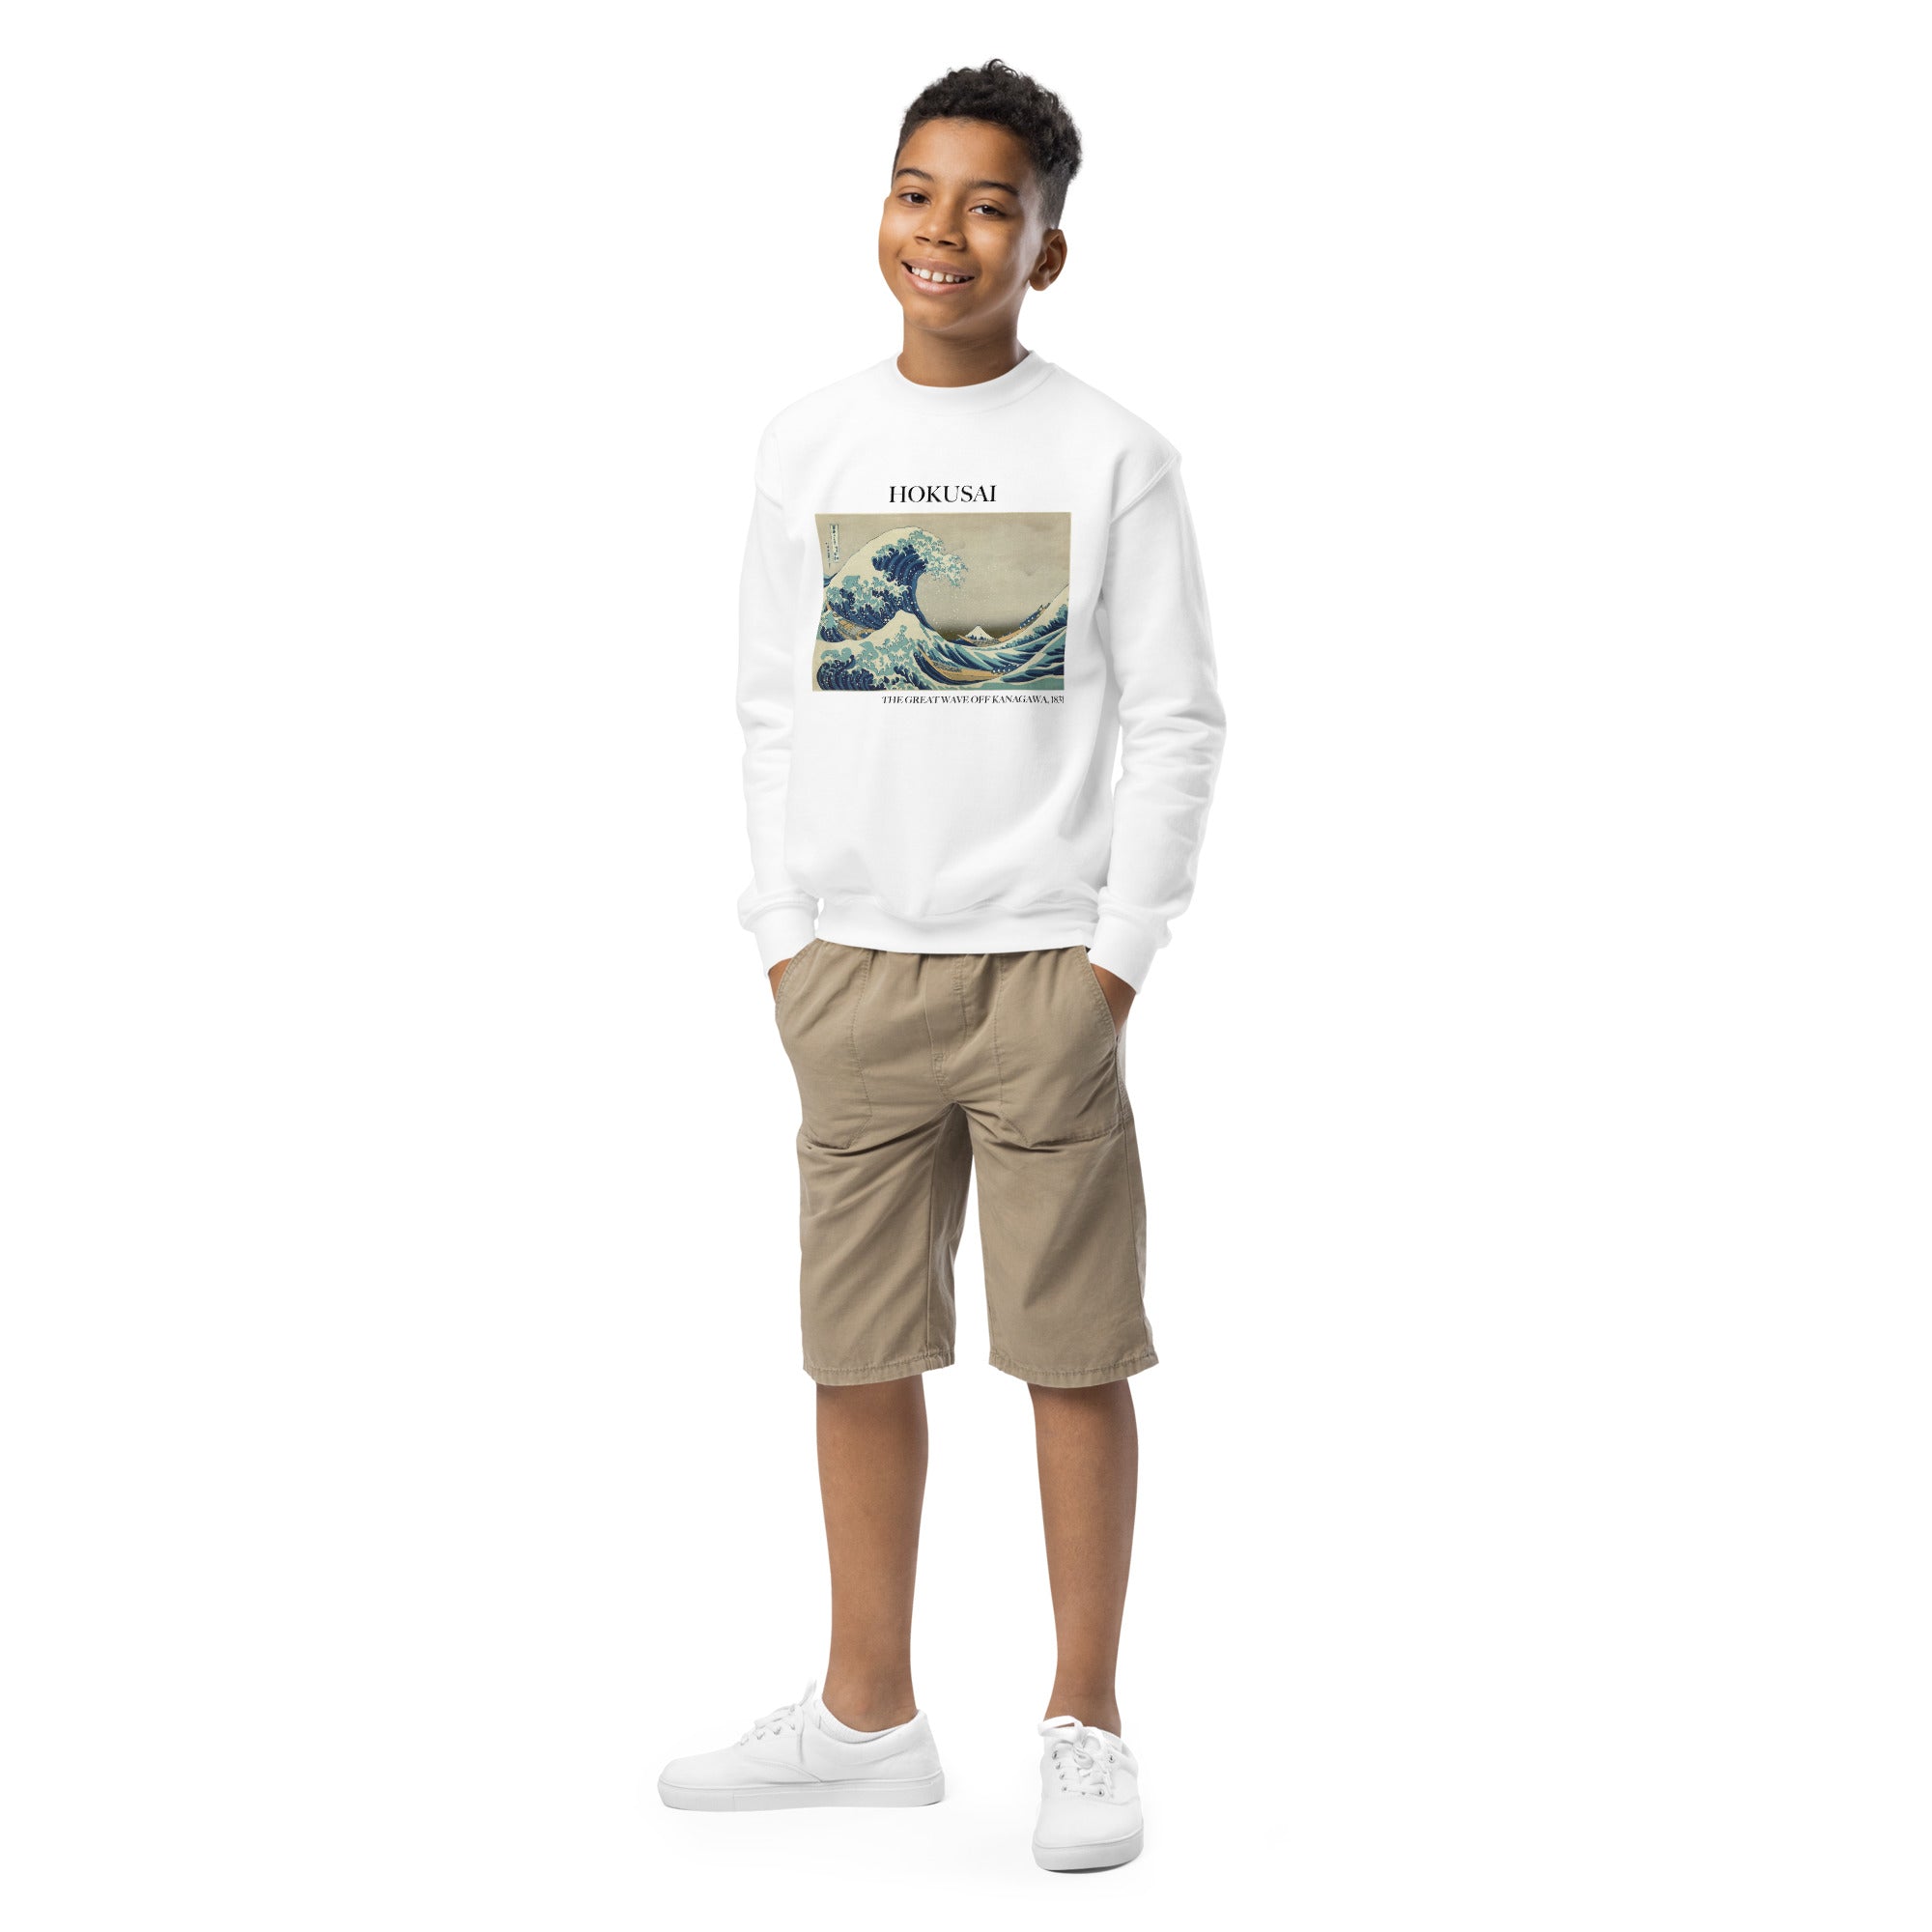 Hokusai 'The Great Wave off Kanagawa' Famous Painting Crewneck Sweatshirt | Premium Youth Art Sweatshirt